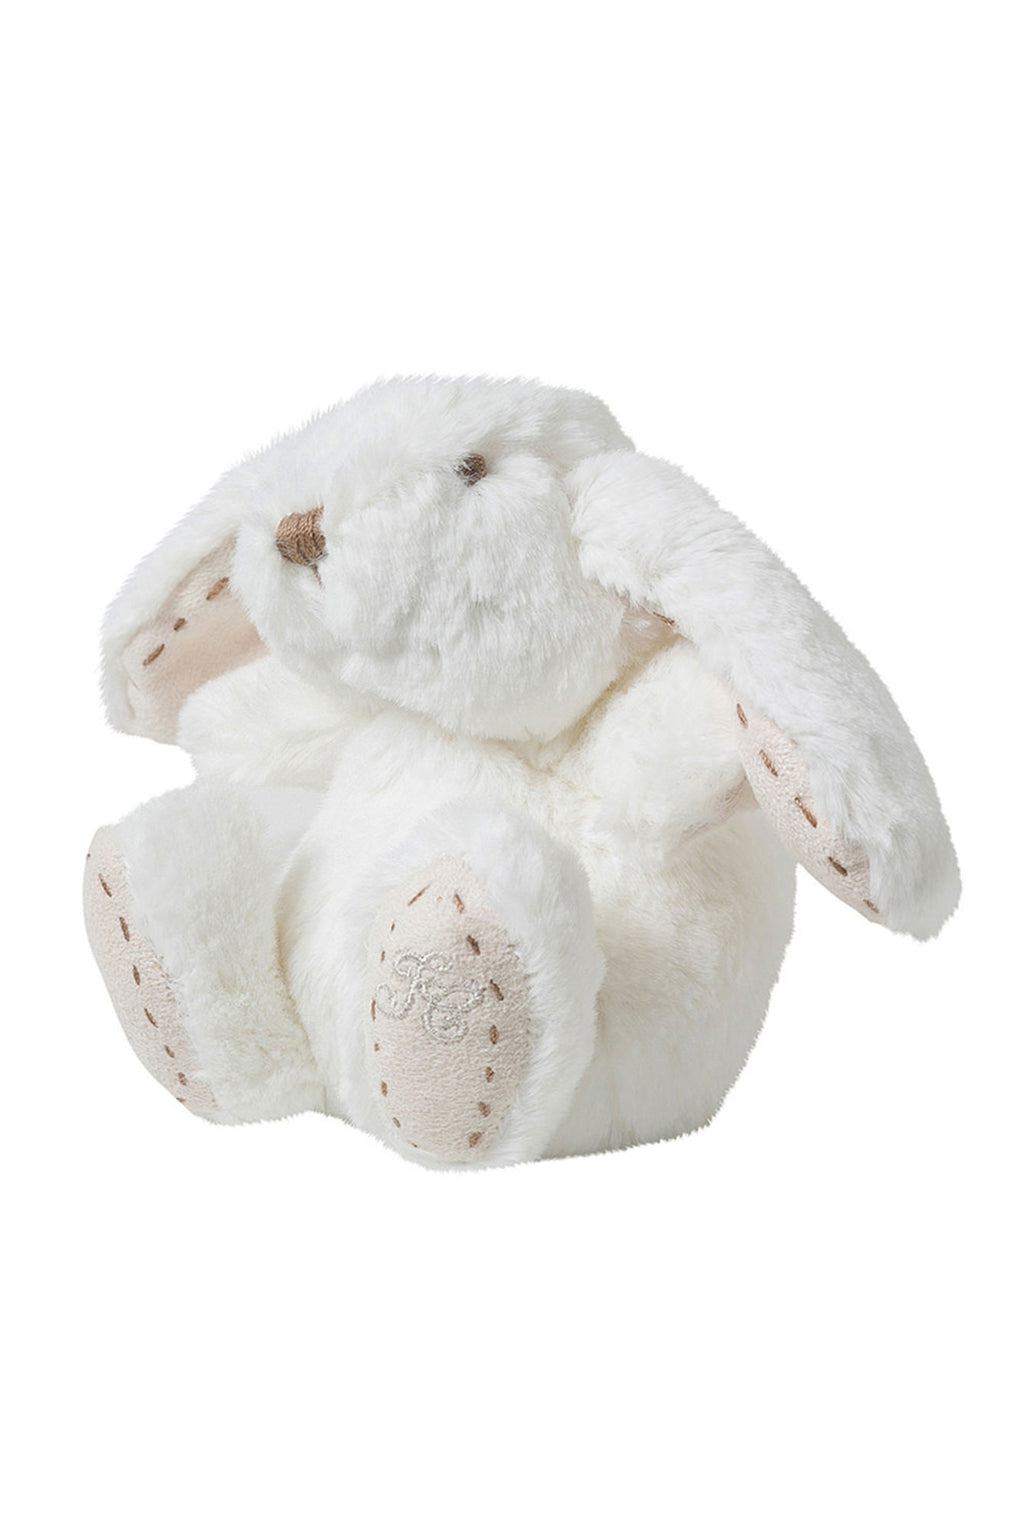 Augustin the rabbit - 12 cm ecru